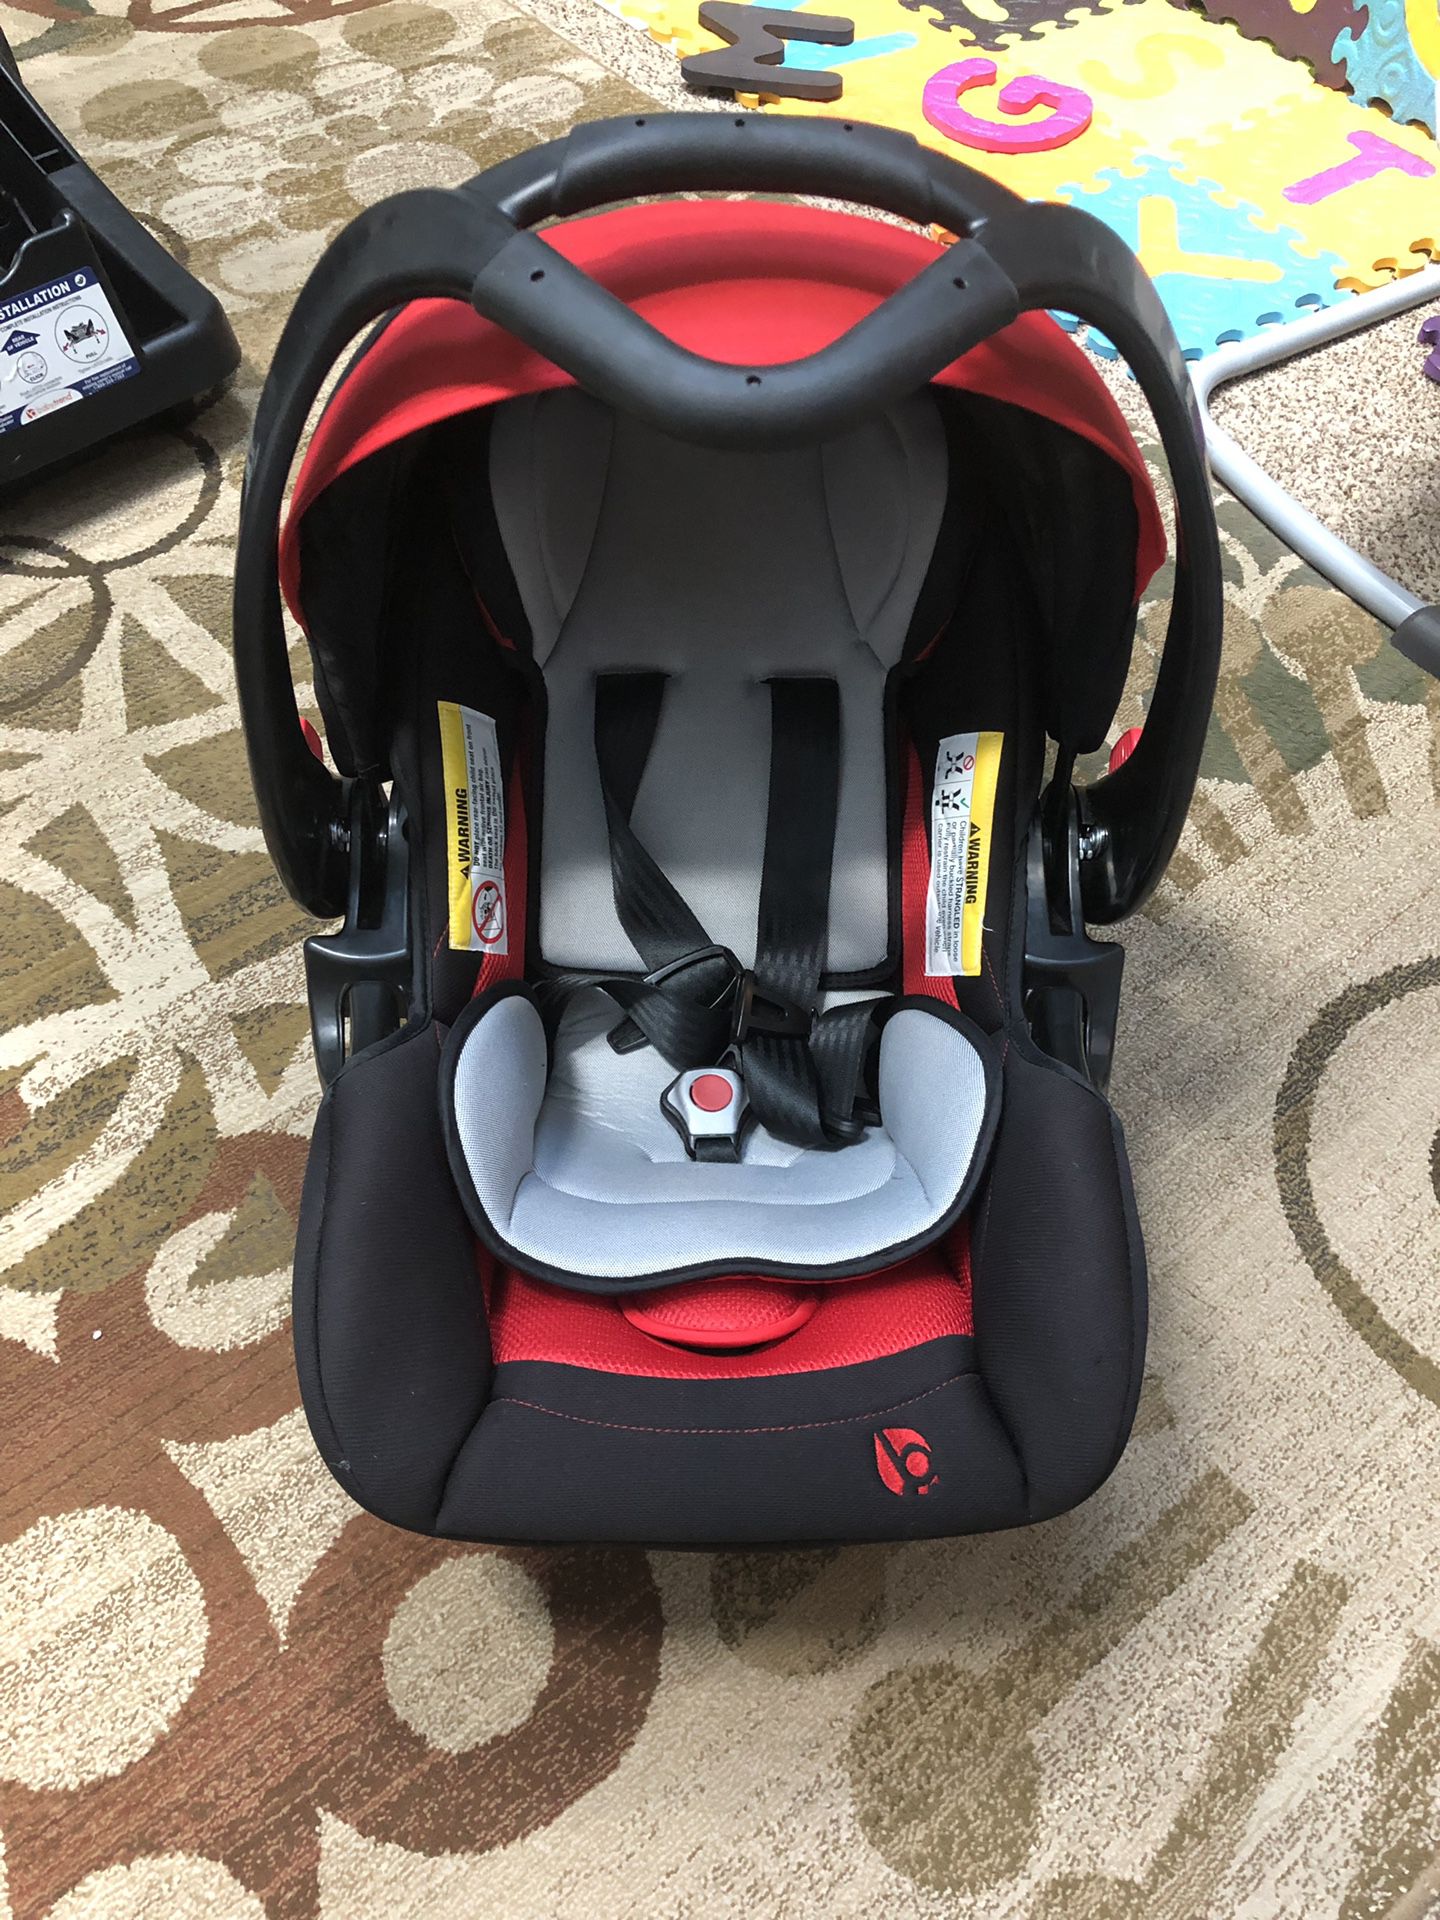 Babytrend car seat, base, and stroller